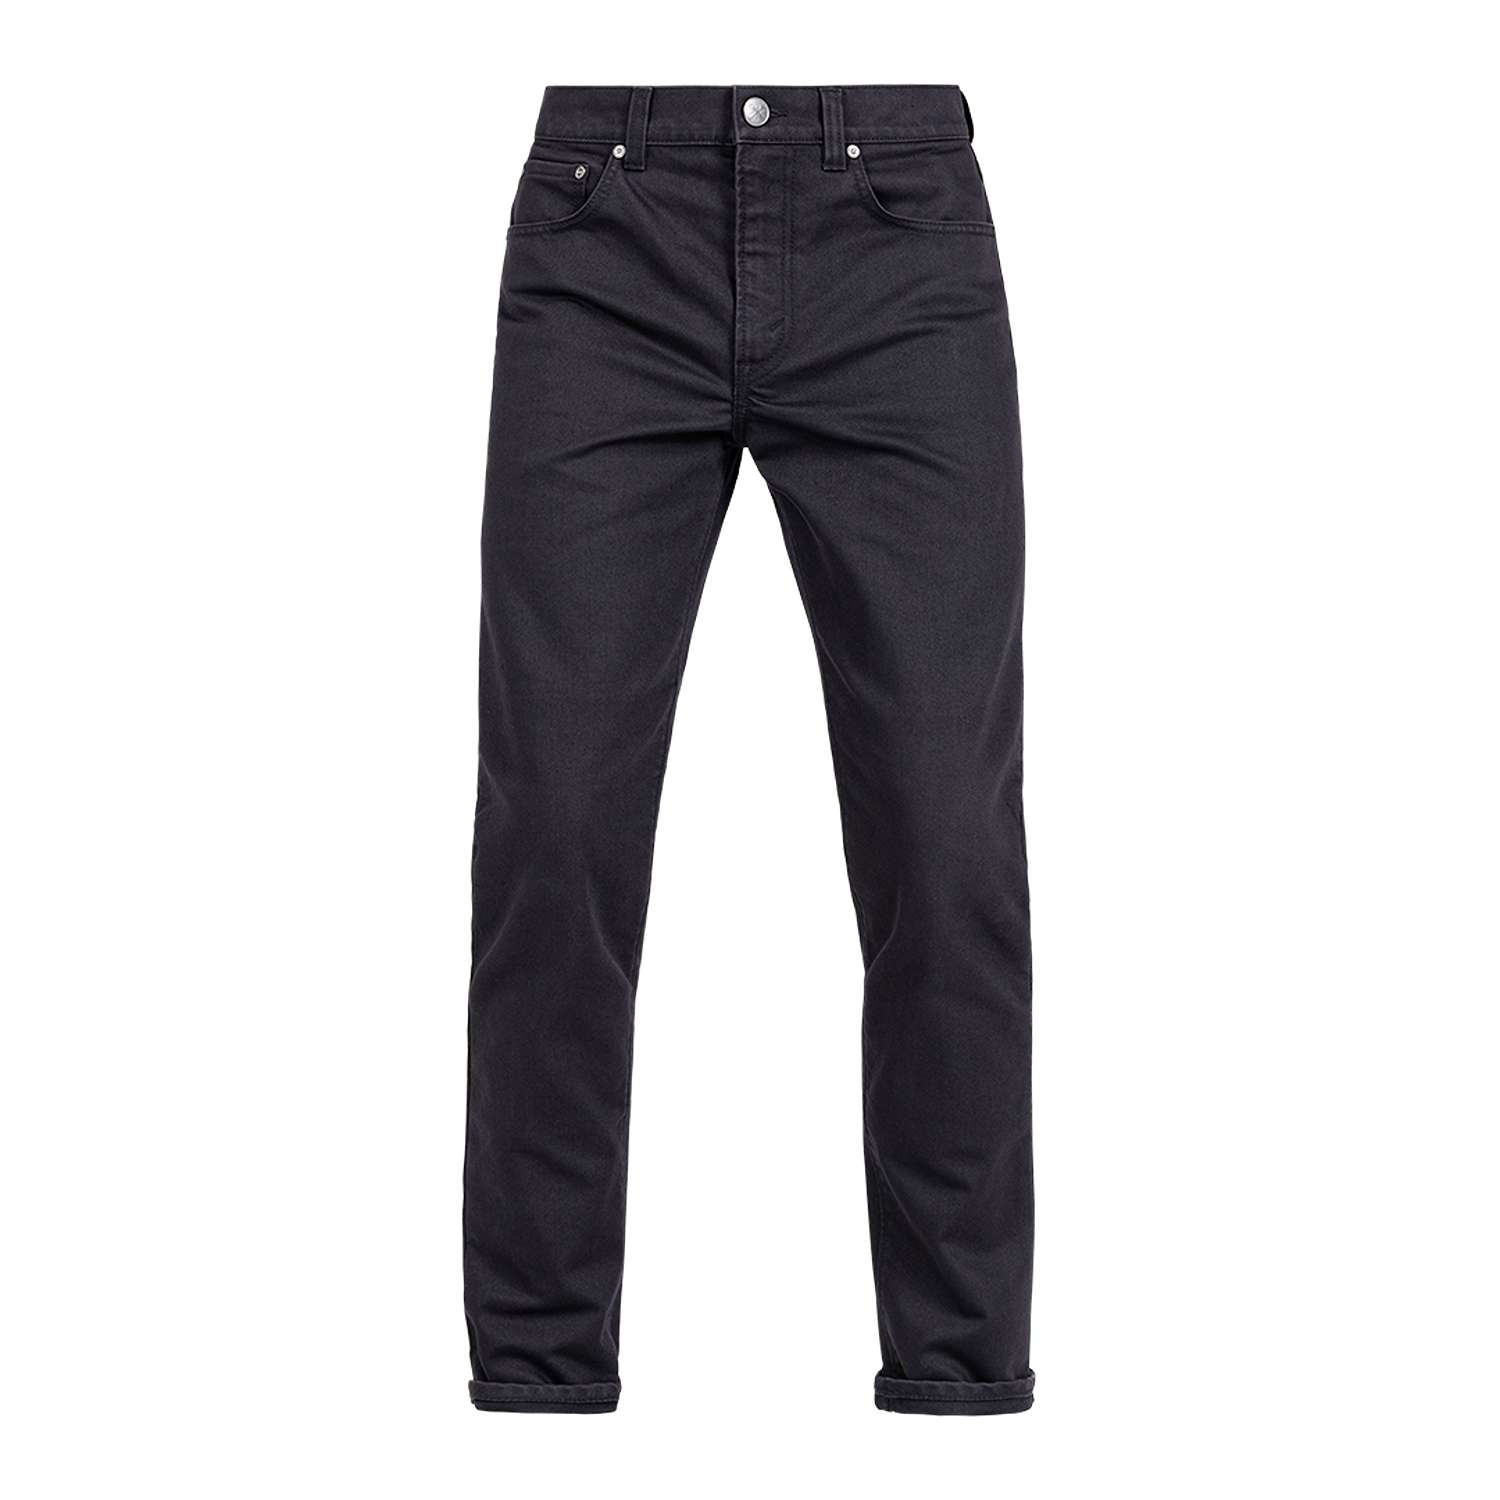 Image of John Doe Classic Tapered Jeans Black Size W32/L32 EN